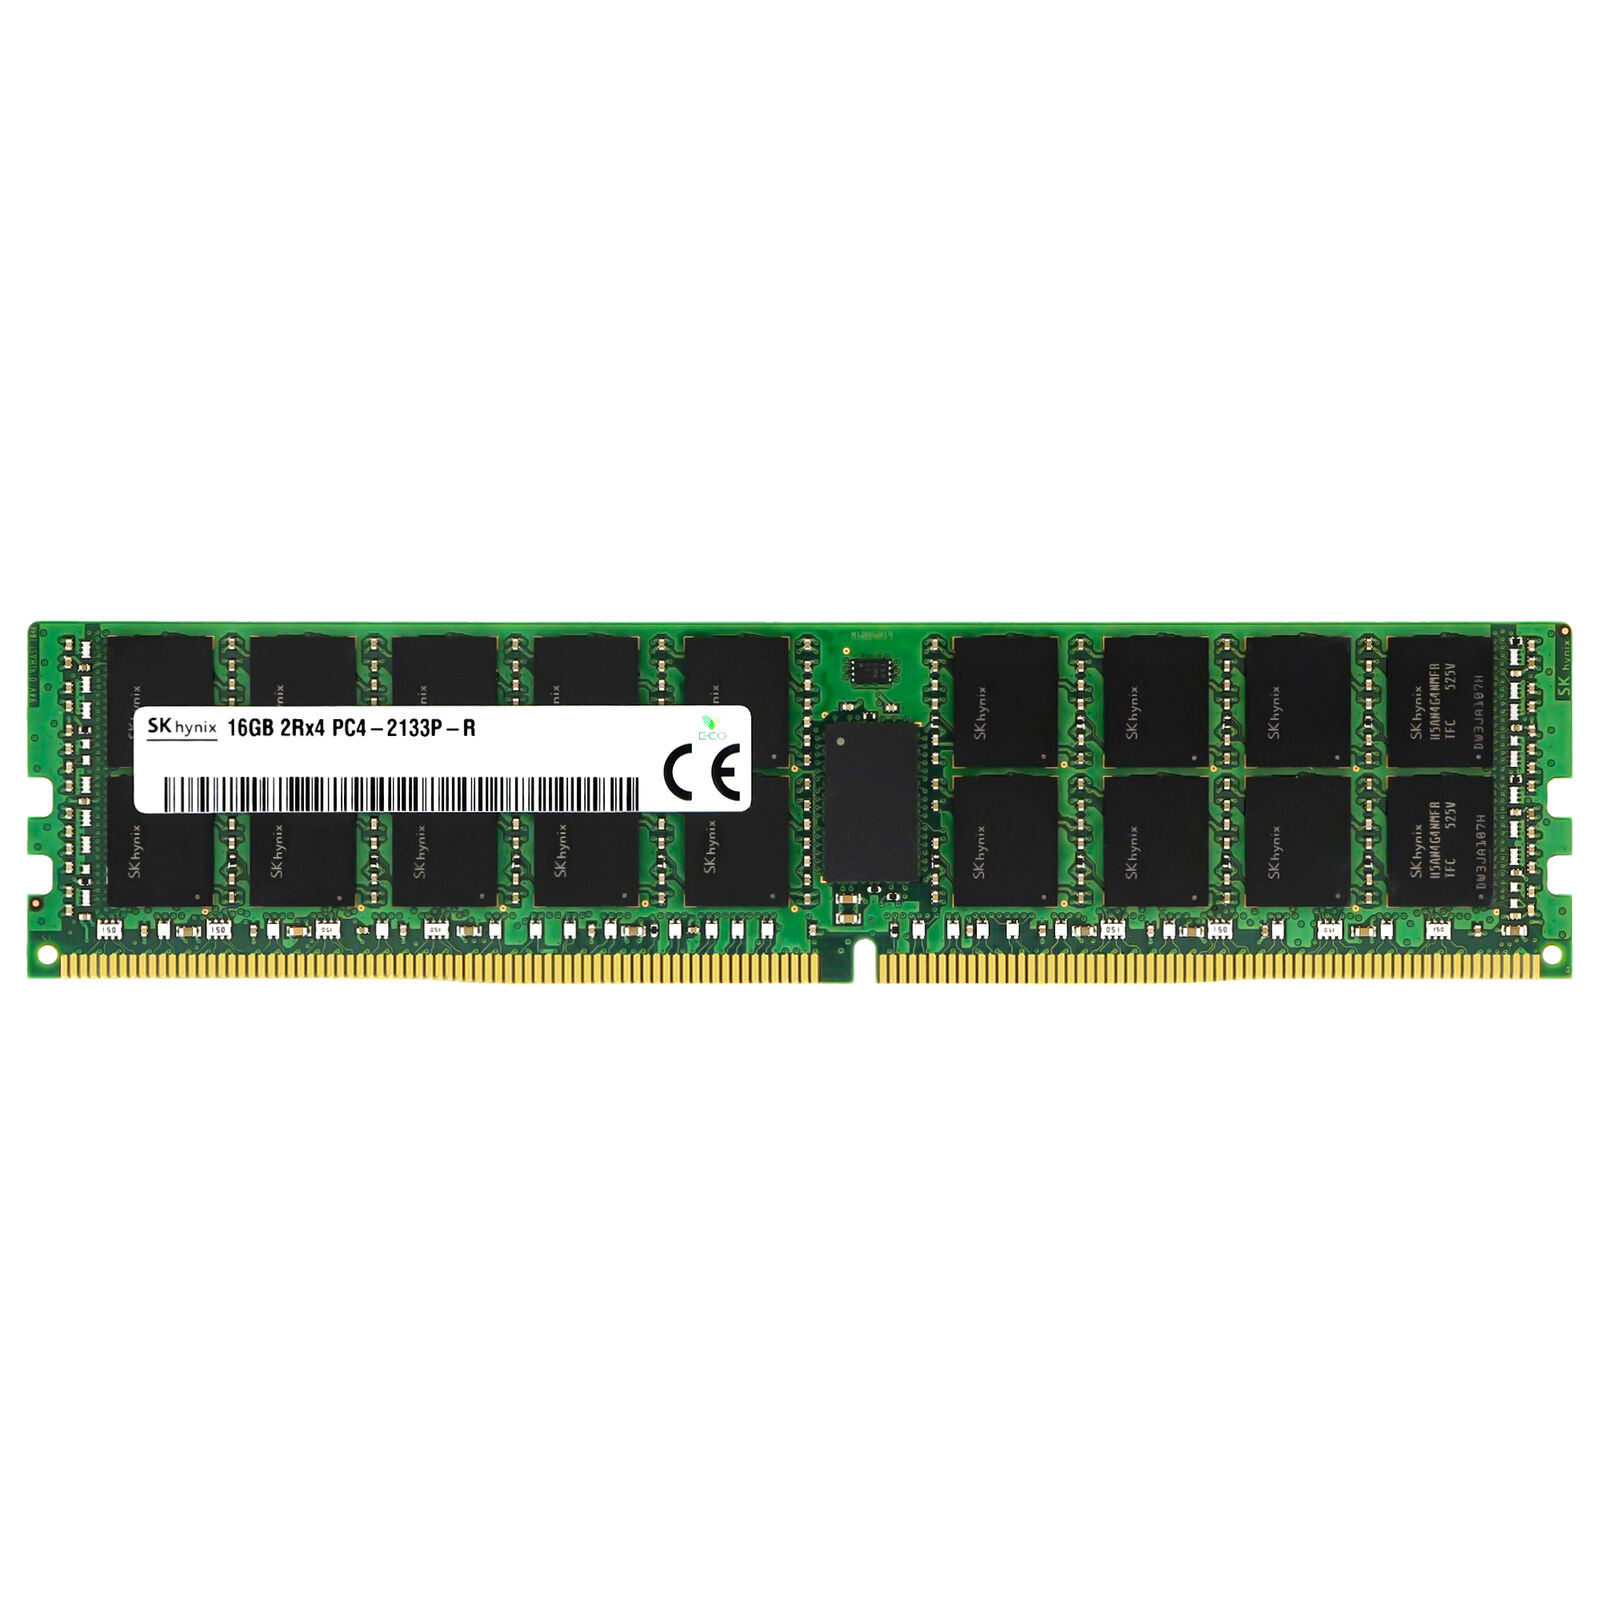 Hynix 16GB 2Rx4 PC4-2133P RDIMM DDR4-17000 ECC REG Registered Server Memory RAM